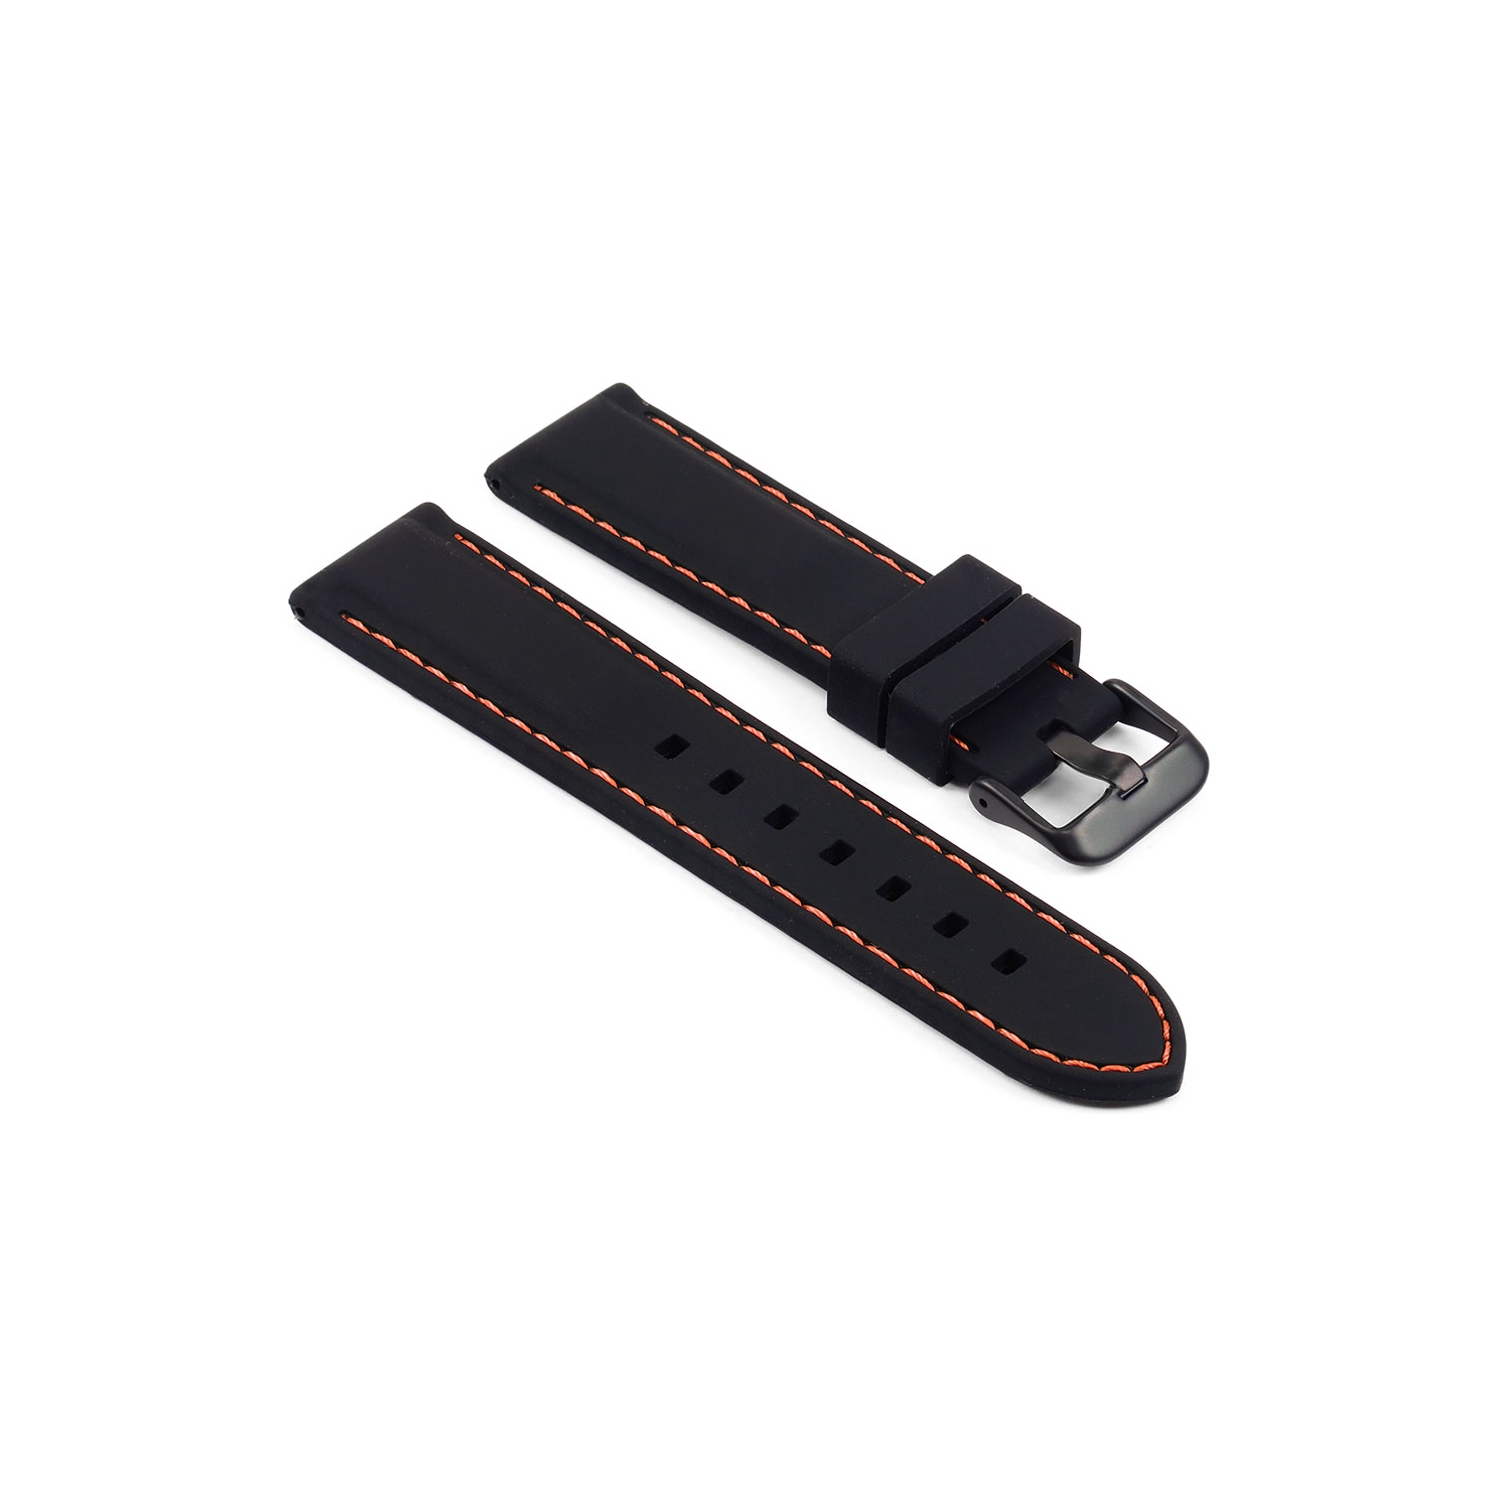 StrapsCo Silicone Rubber Watch Band Strap with Stitching for Samsung Galaxy Watch Active - Black & Orange (Black Buckle)